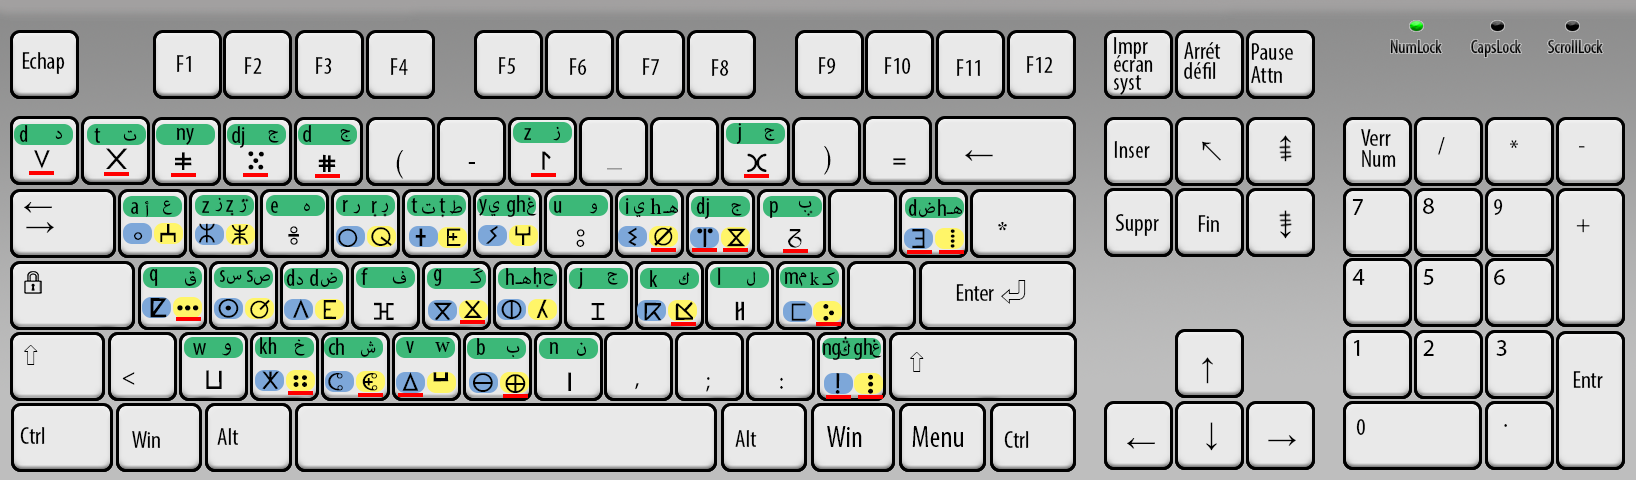 Tamazight Keyboard Tifinagh layout